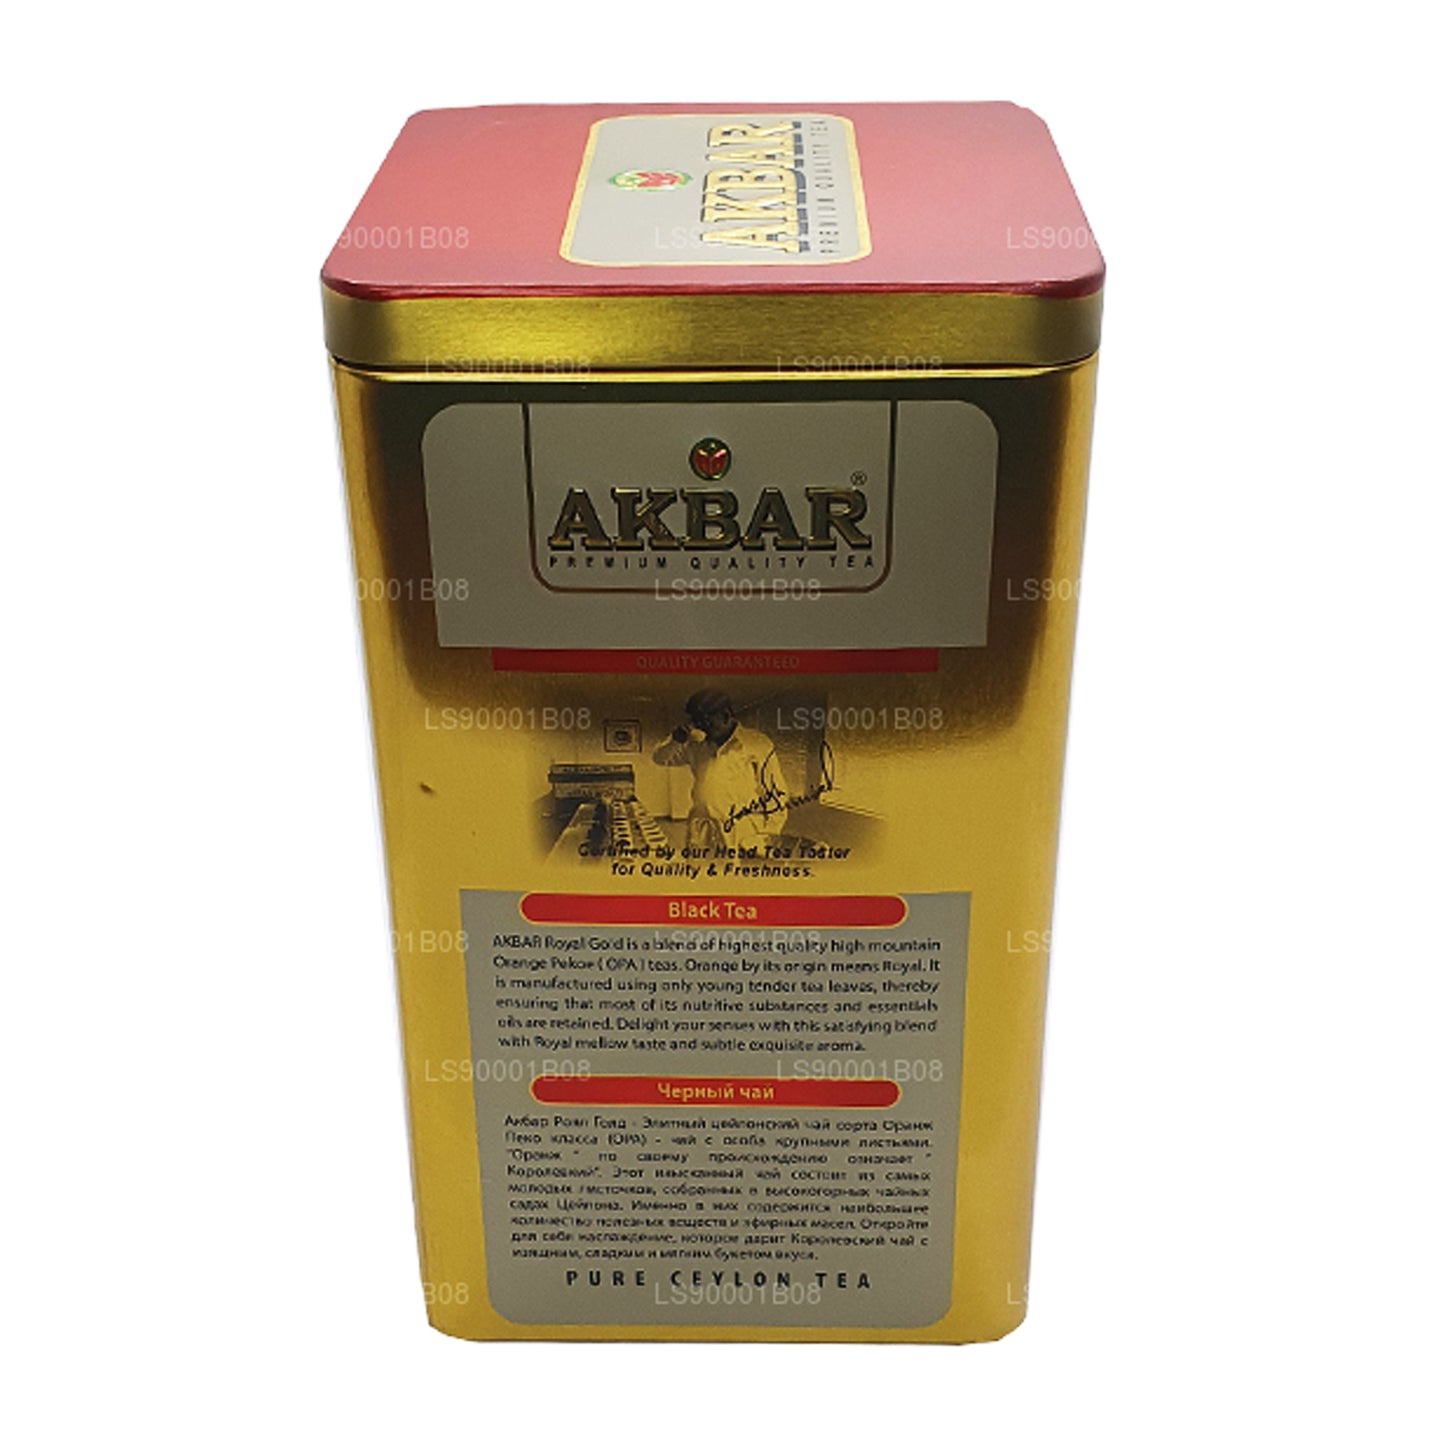 Akbar Royal Gold avec cuillère (250g)